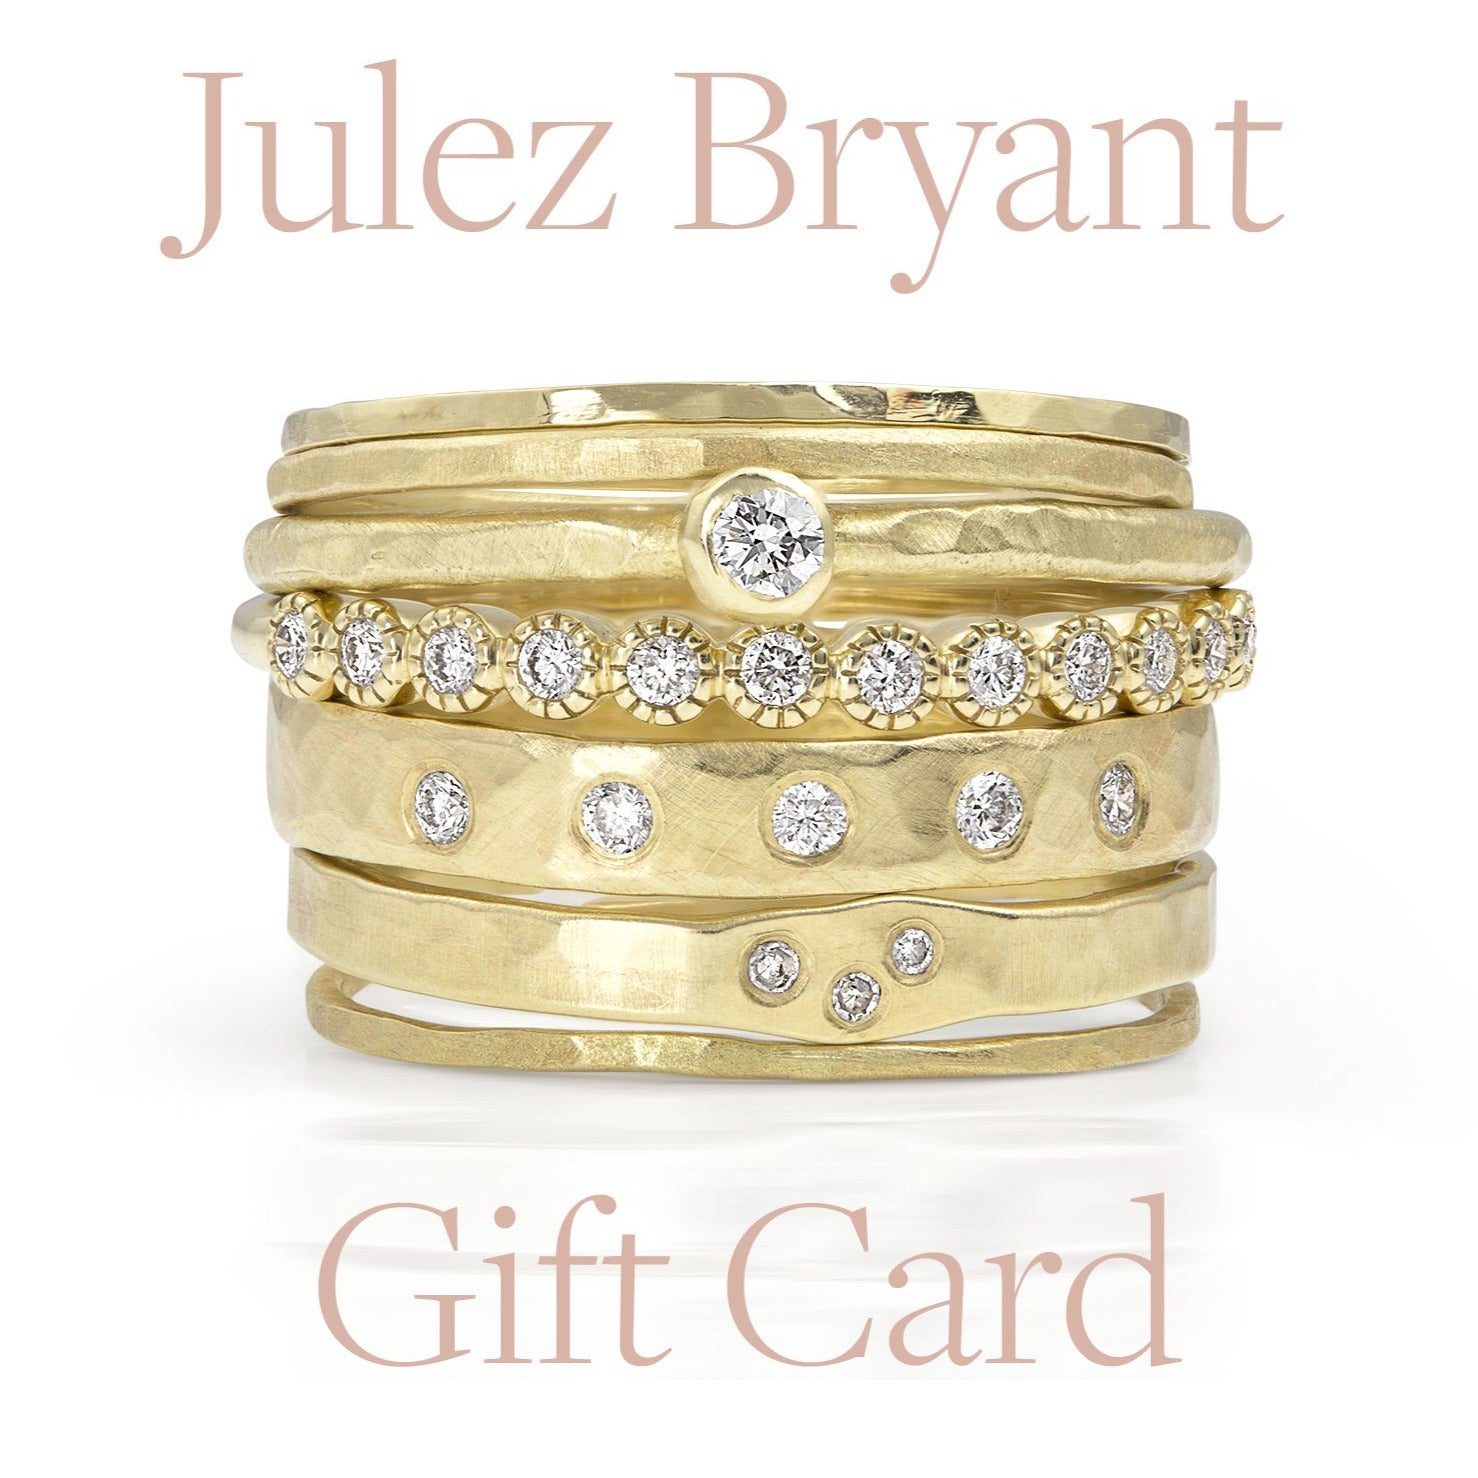 Julez bryant gift card image with stack of PRIM, RELA, RAYA rings